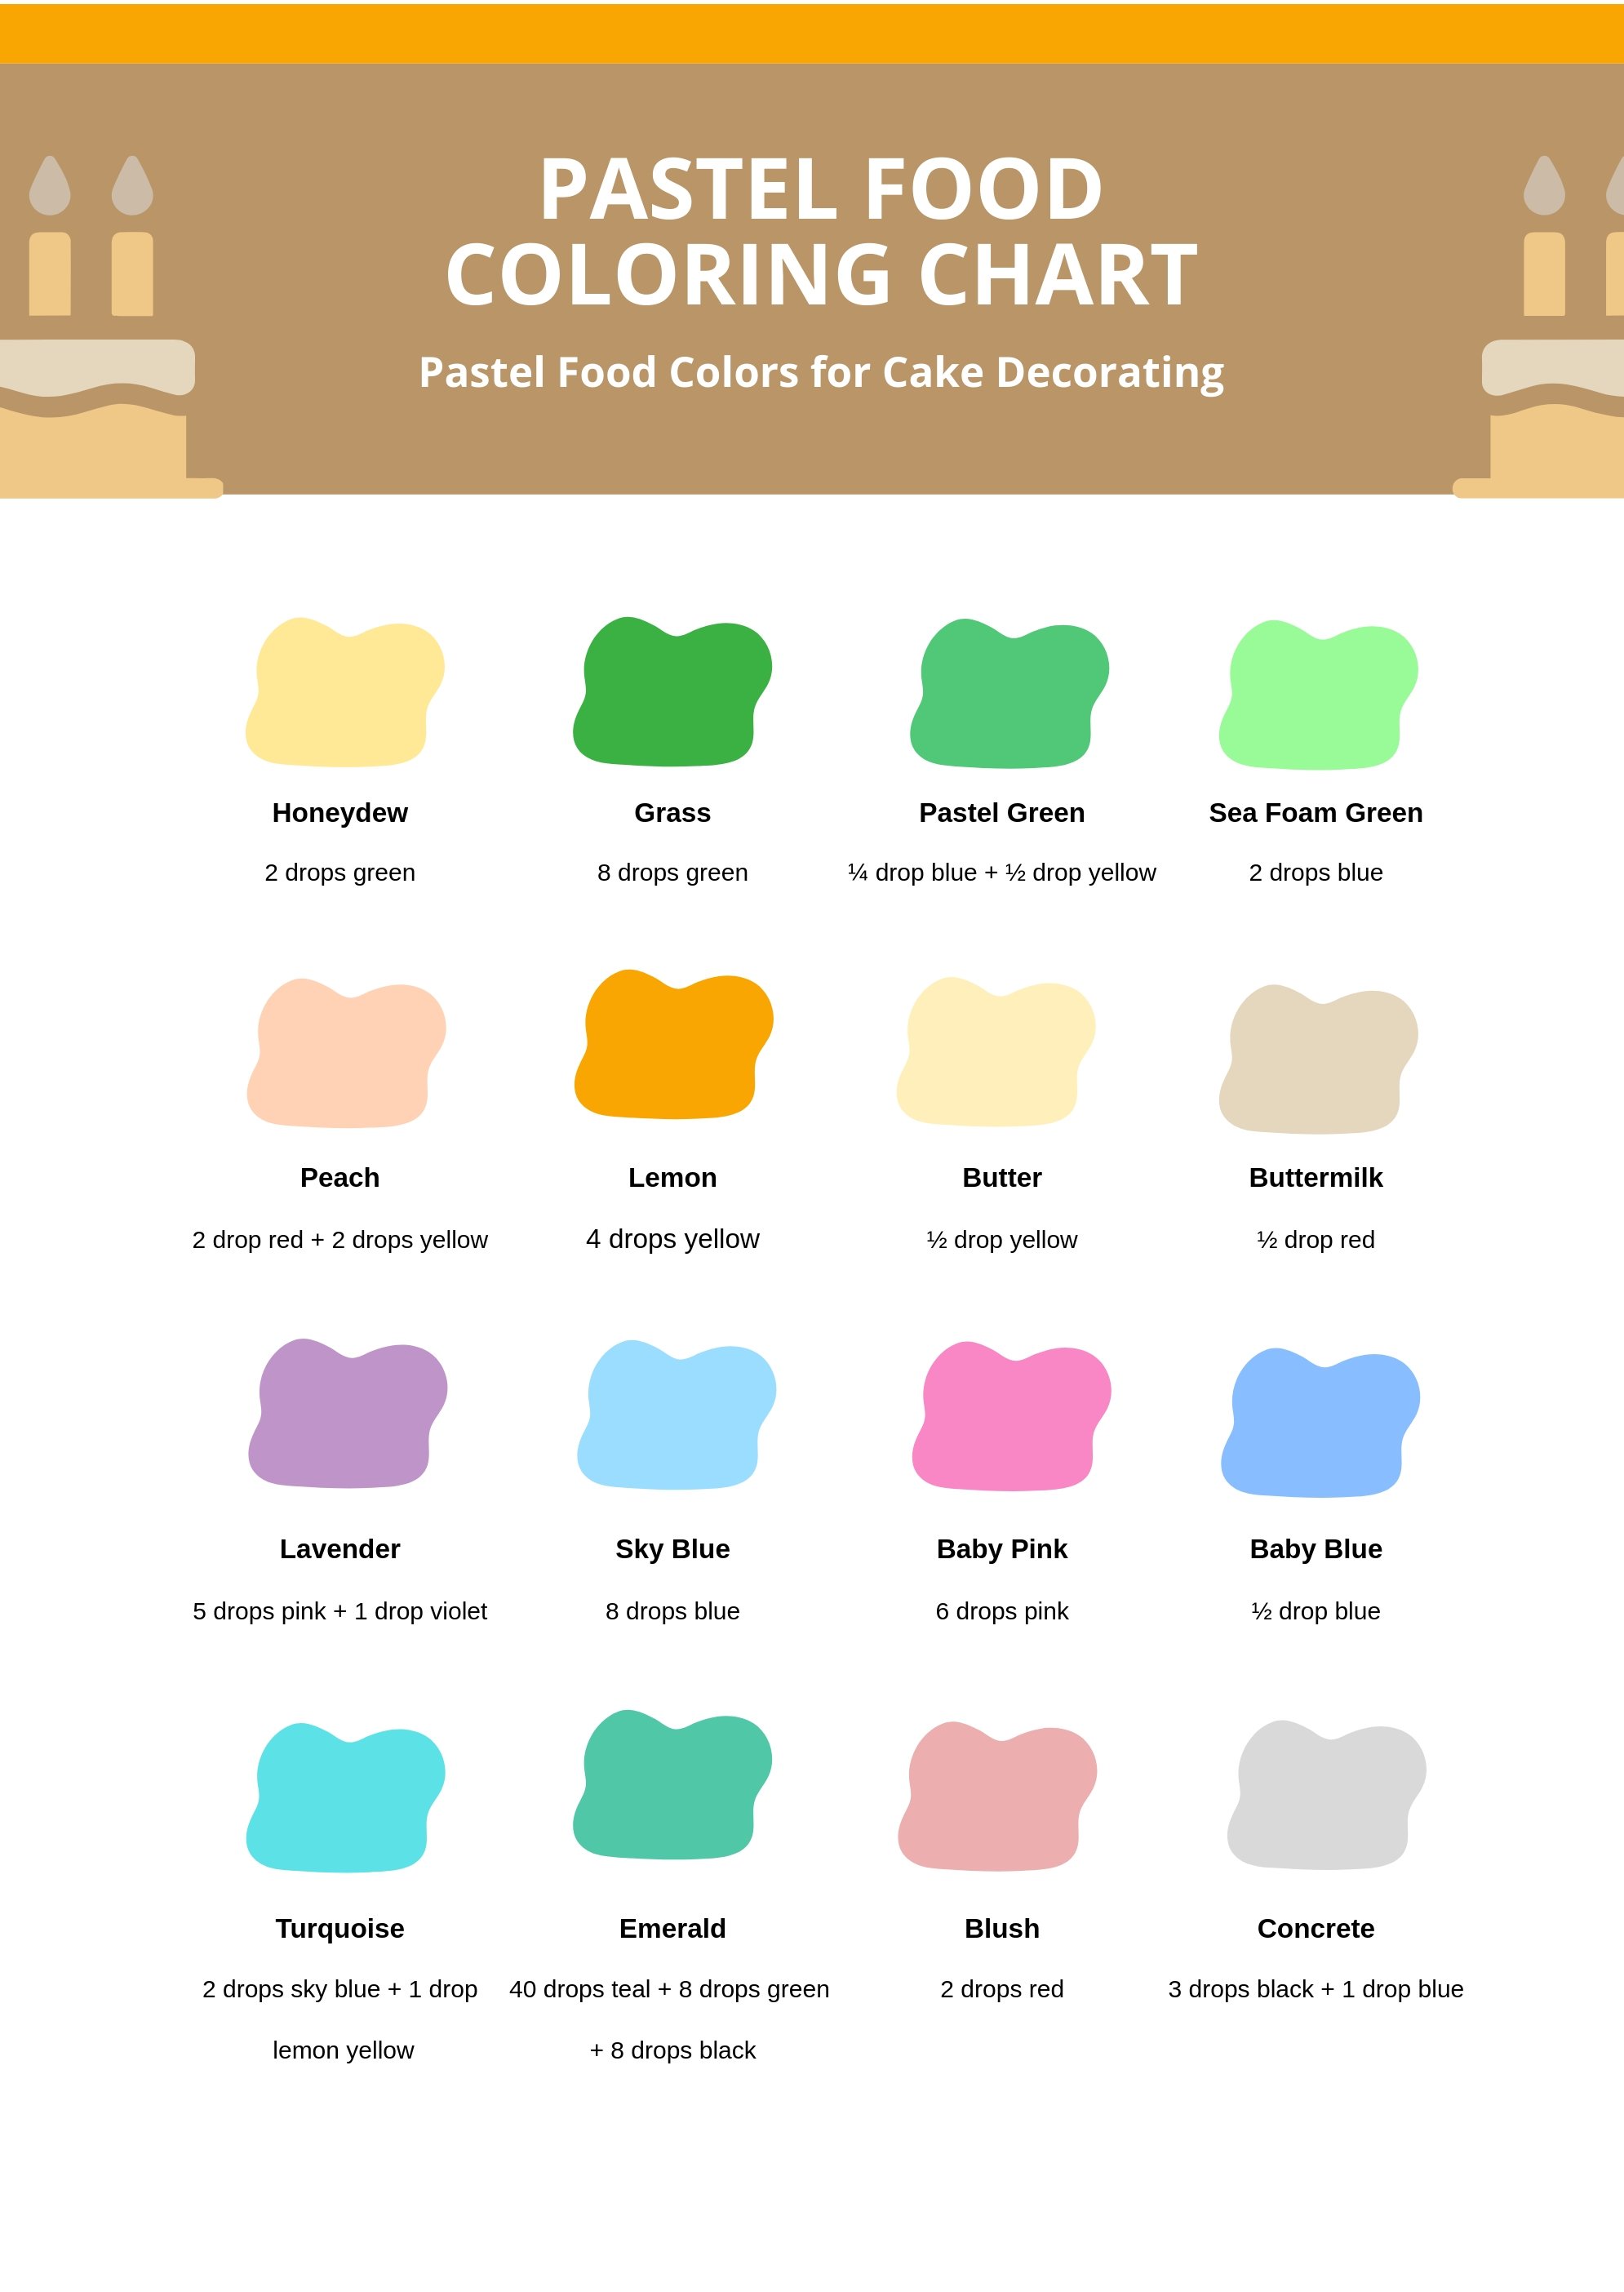 Pastel Food Coloring Chart in PDF, Illustrator